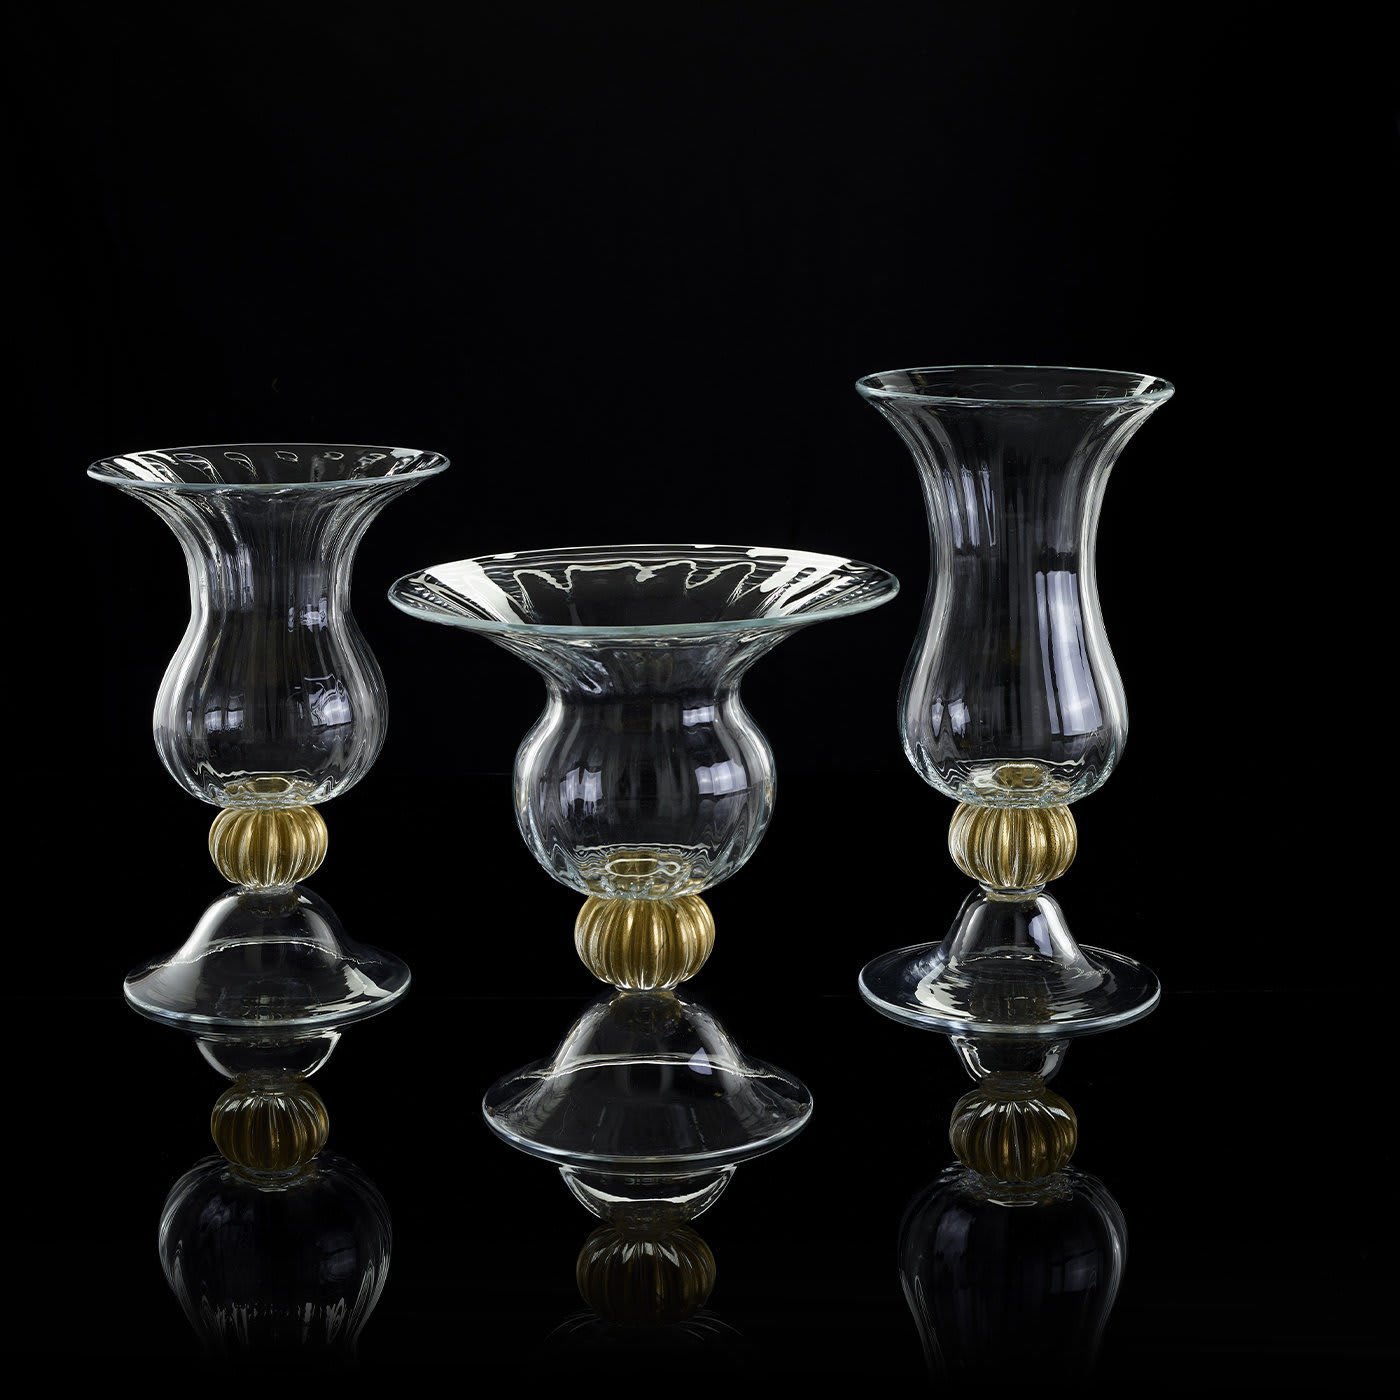 Berenice Medium Vase Centerpiece - 24k Gold Leaf  - Mara Dal Cin for DFN